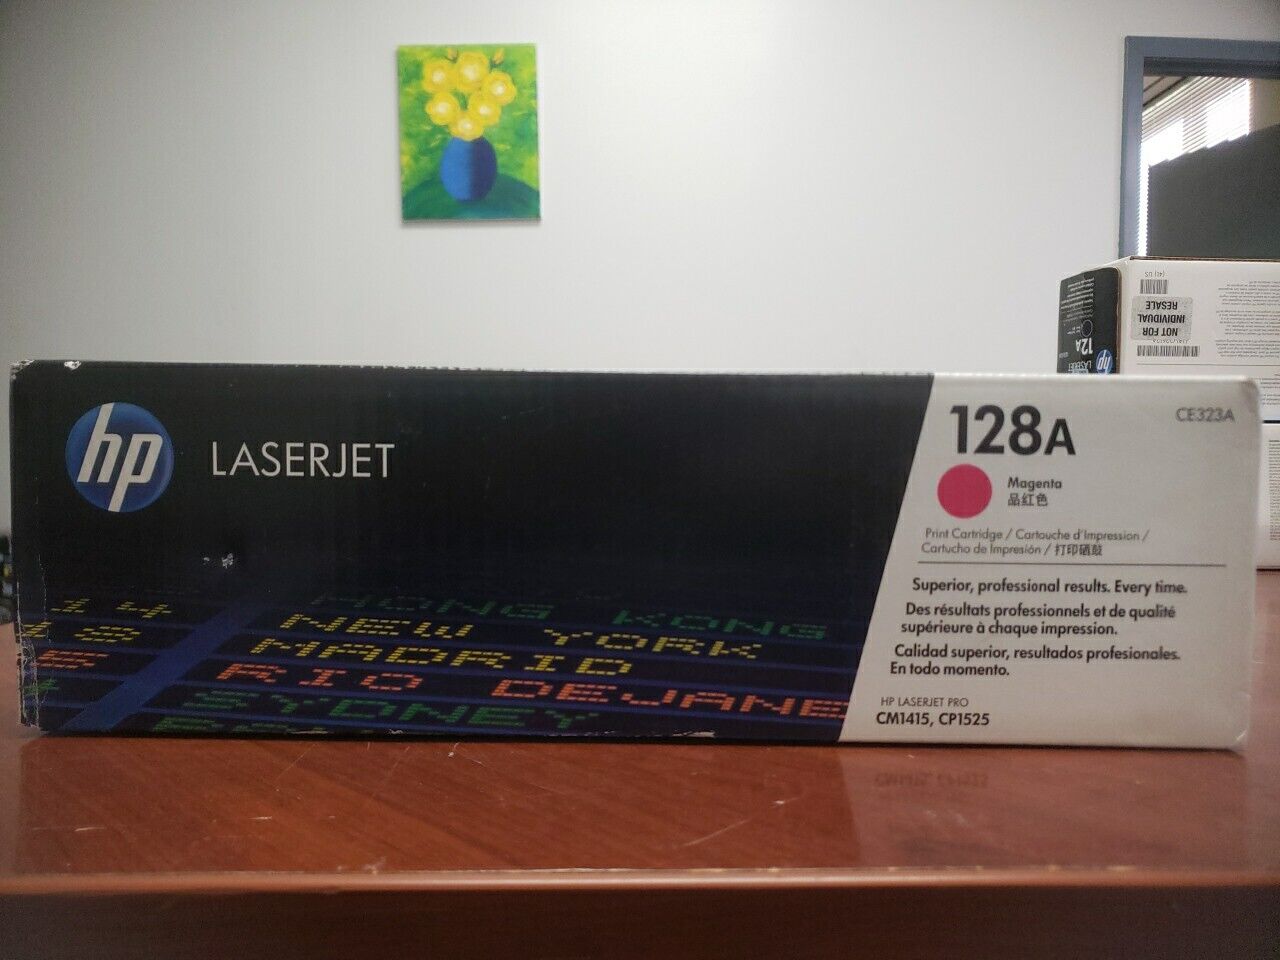 1 CE323A Magenta Toner Cartridge HP Color LaserJet Pro 128A SEALED/BRAND NEW